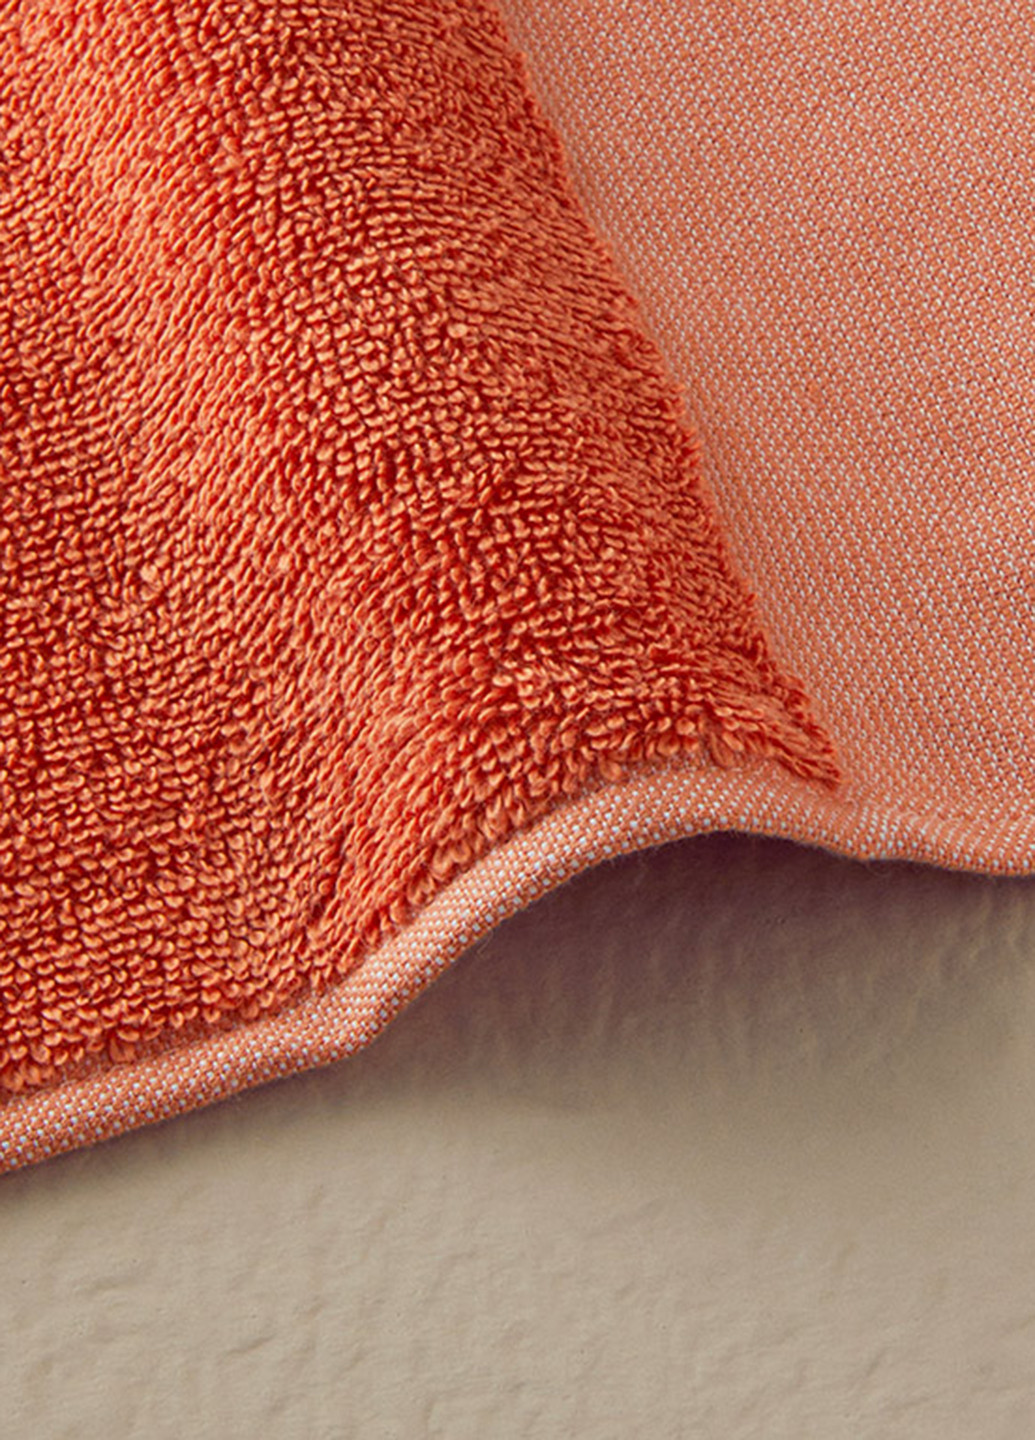 English Home полотенце, 50х80 см однотонный оранжевый производство - Турция